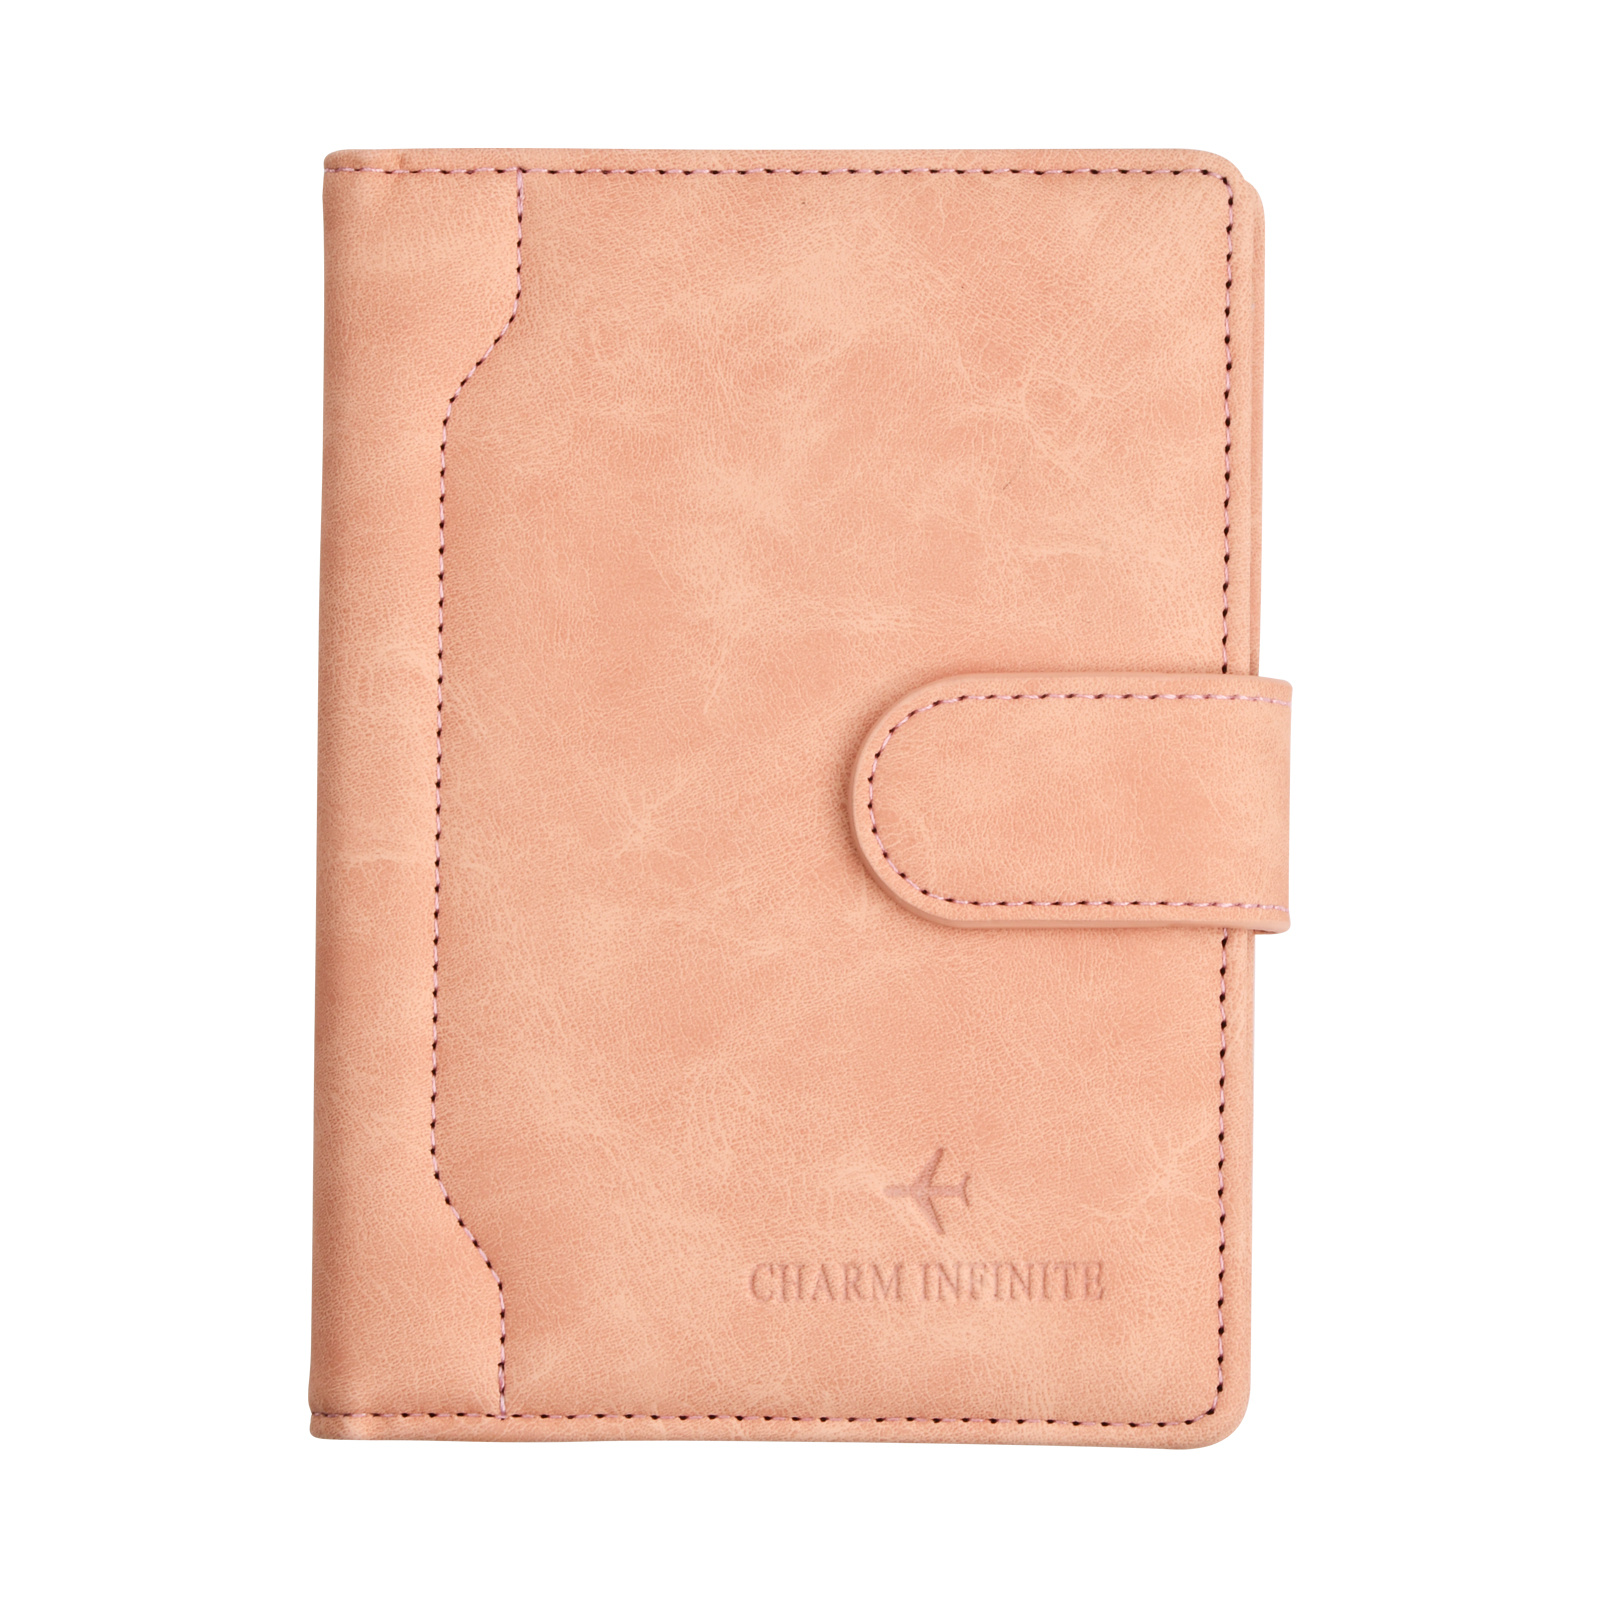 RFID Genuine Leather Travel Wallet Passport Holder Card Case Cover